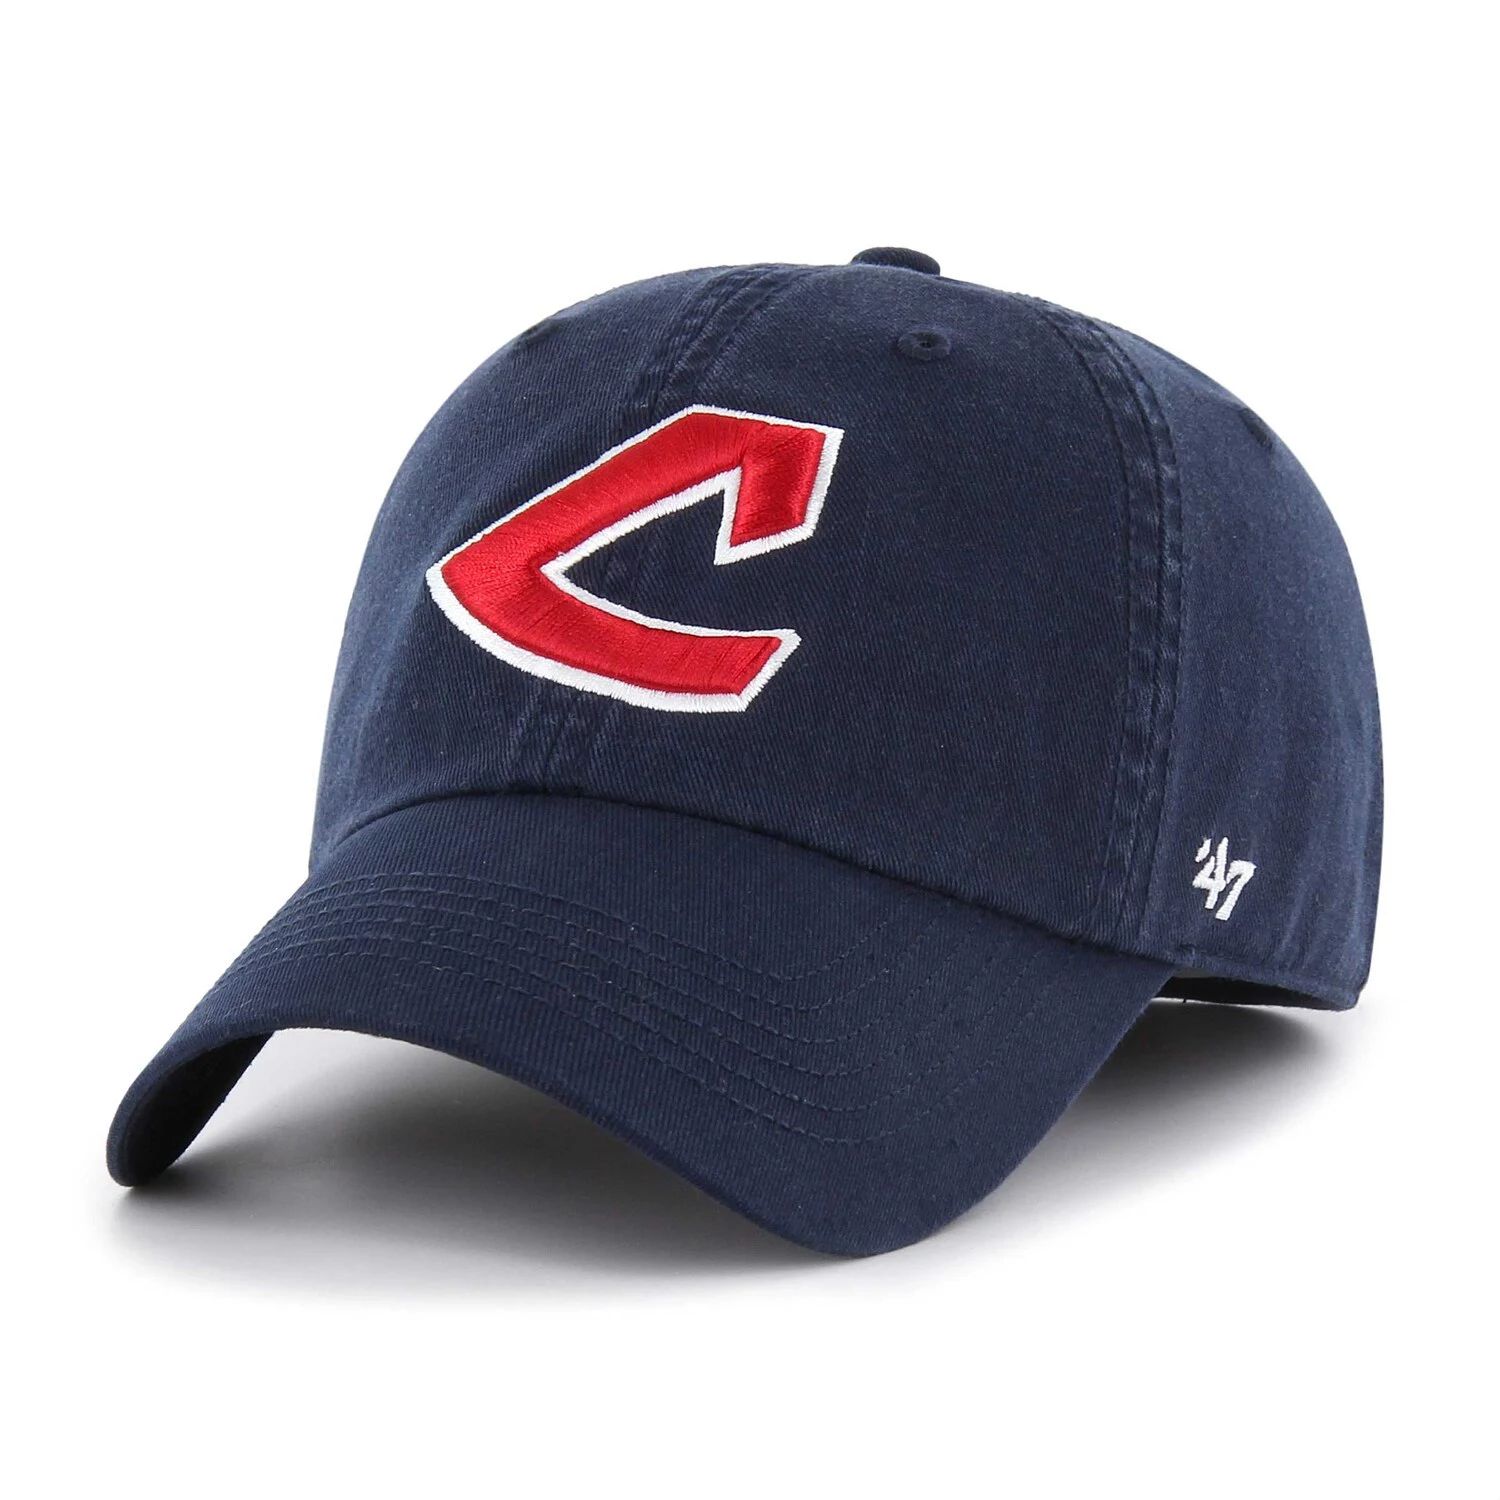 Мужская шляпа темно-синего цвета '47 Cleveland Indians Cooperstown Collection Franchise приталенная шляпа